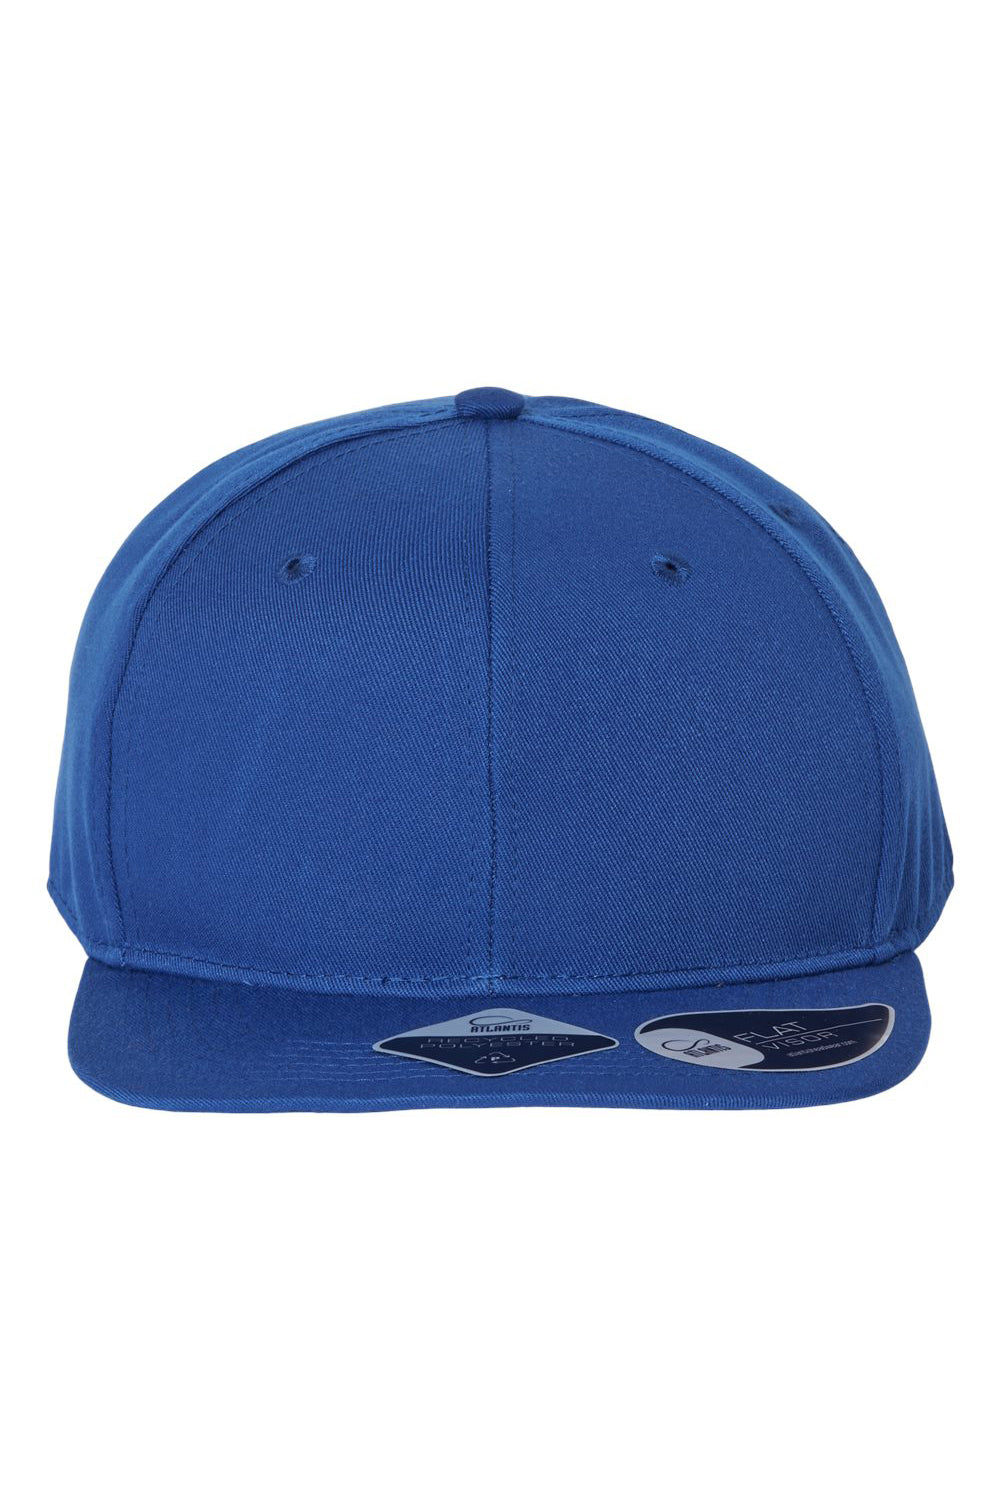 Atlantis Headwear JAMES Mens Sustainable Flat Bill Snapback Hat Royal Blue Flat Front